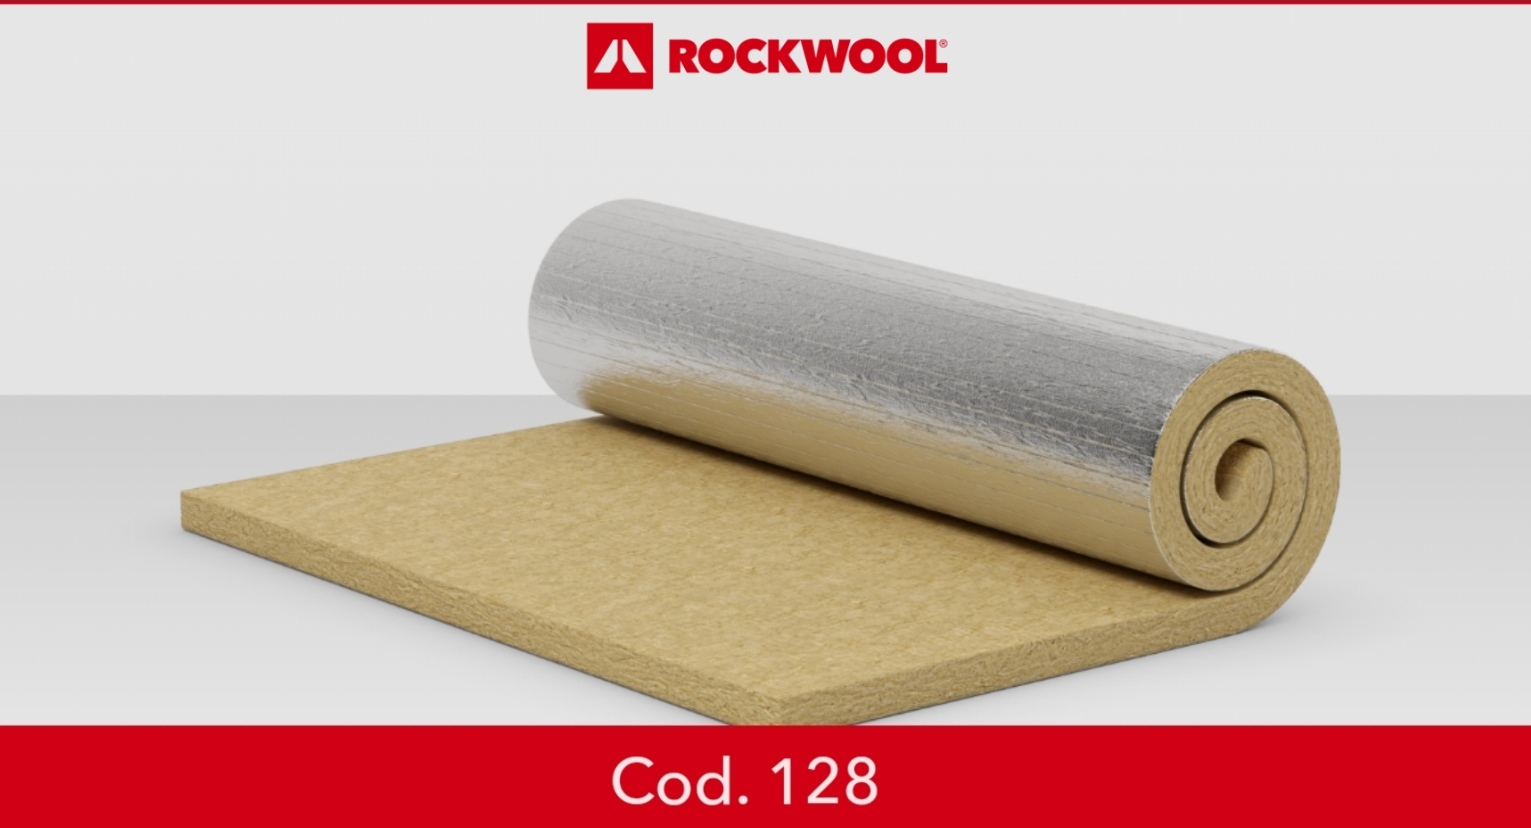 Feltro in lana di roccia Cod. 128 -Rockwool - ISOBIT